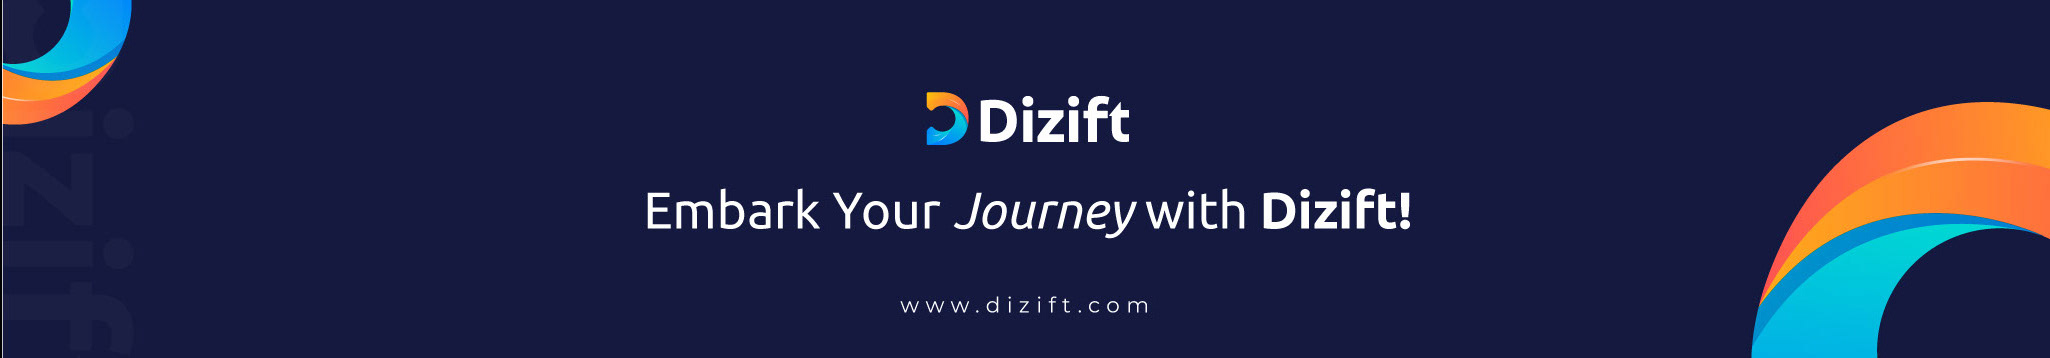 Dizift ✪'s profile banner